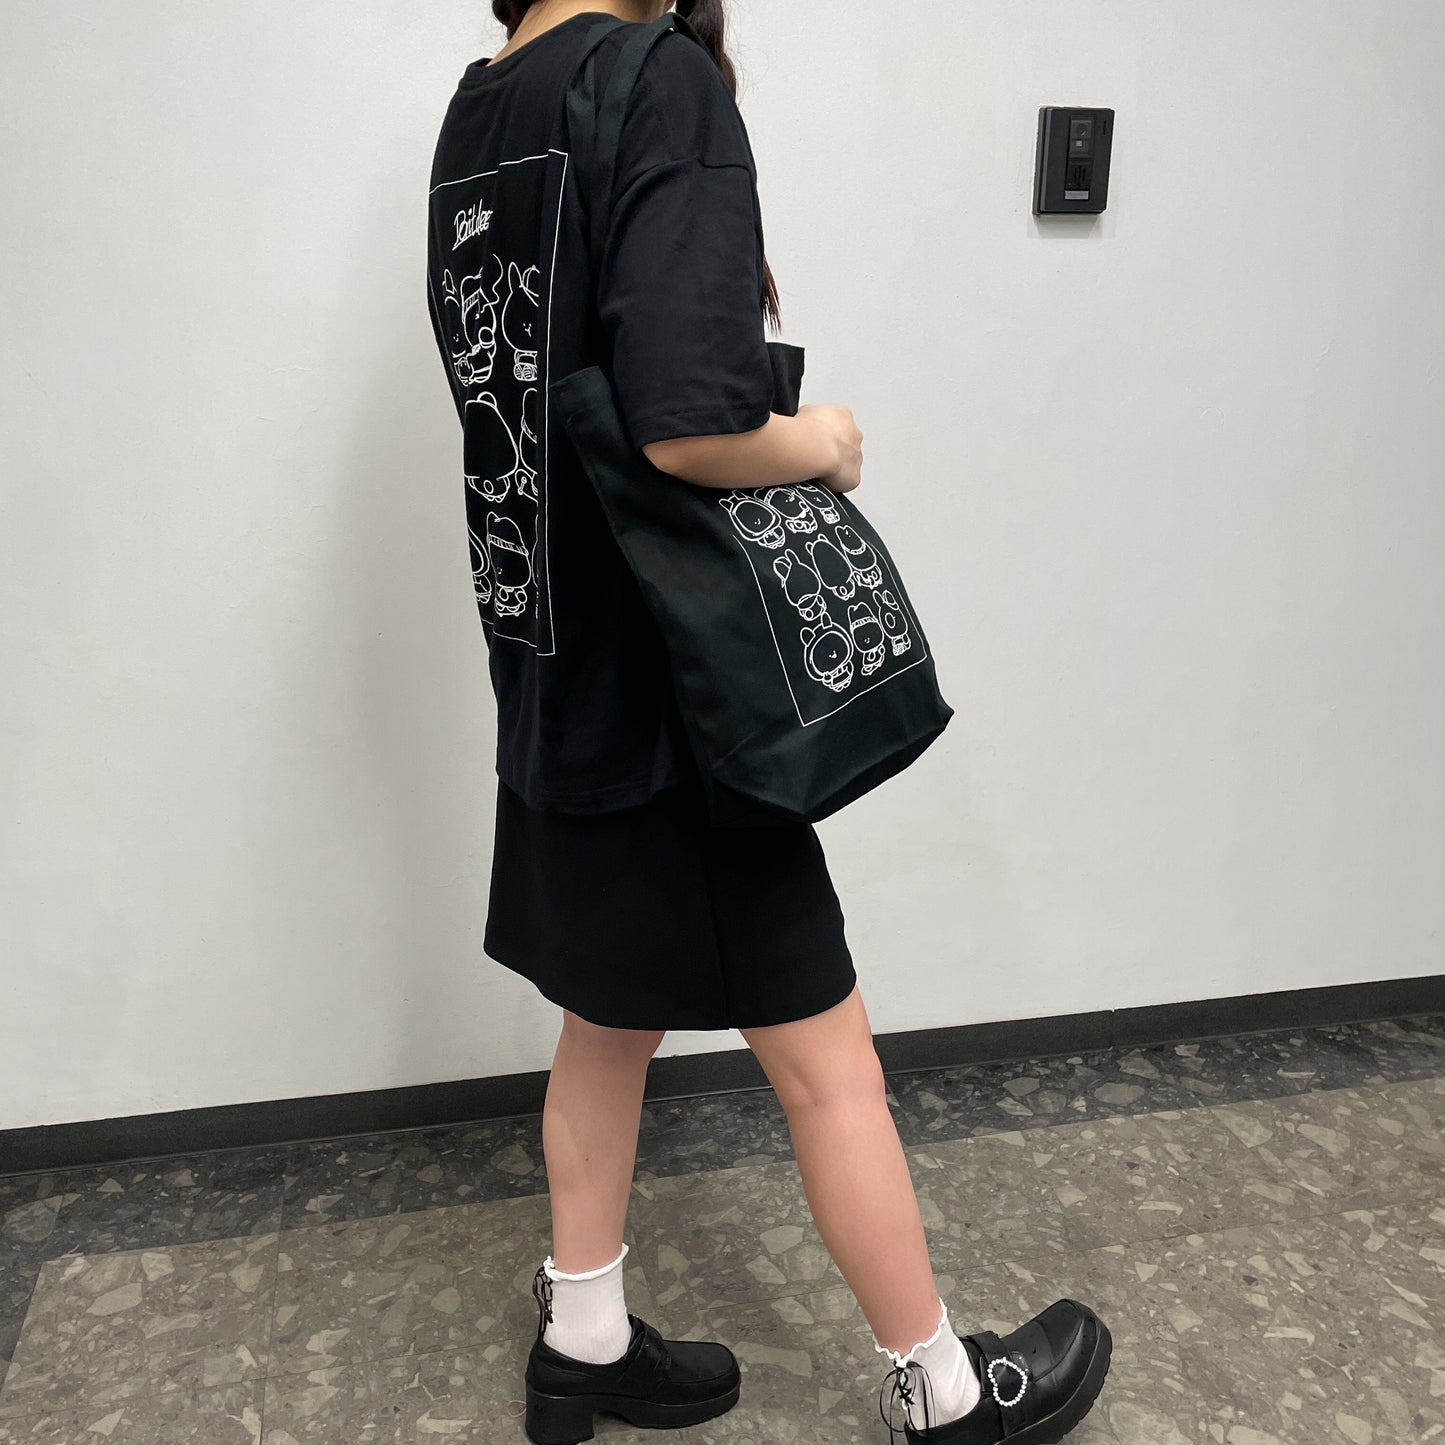 [Asamimi-chan] Tote bag (tight) [shipped in mid-October]